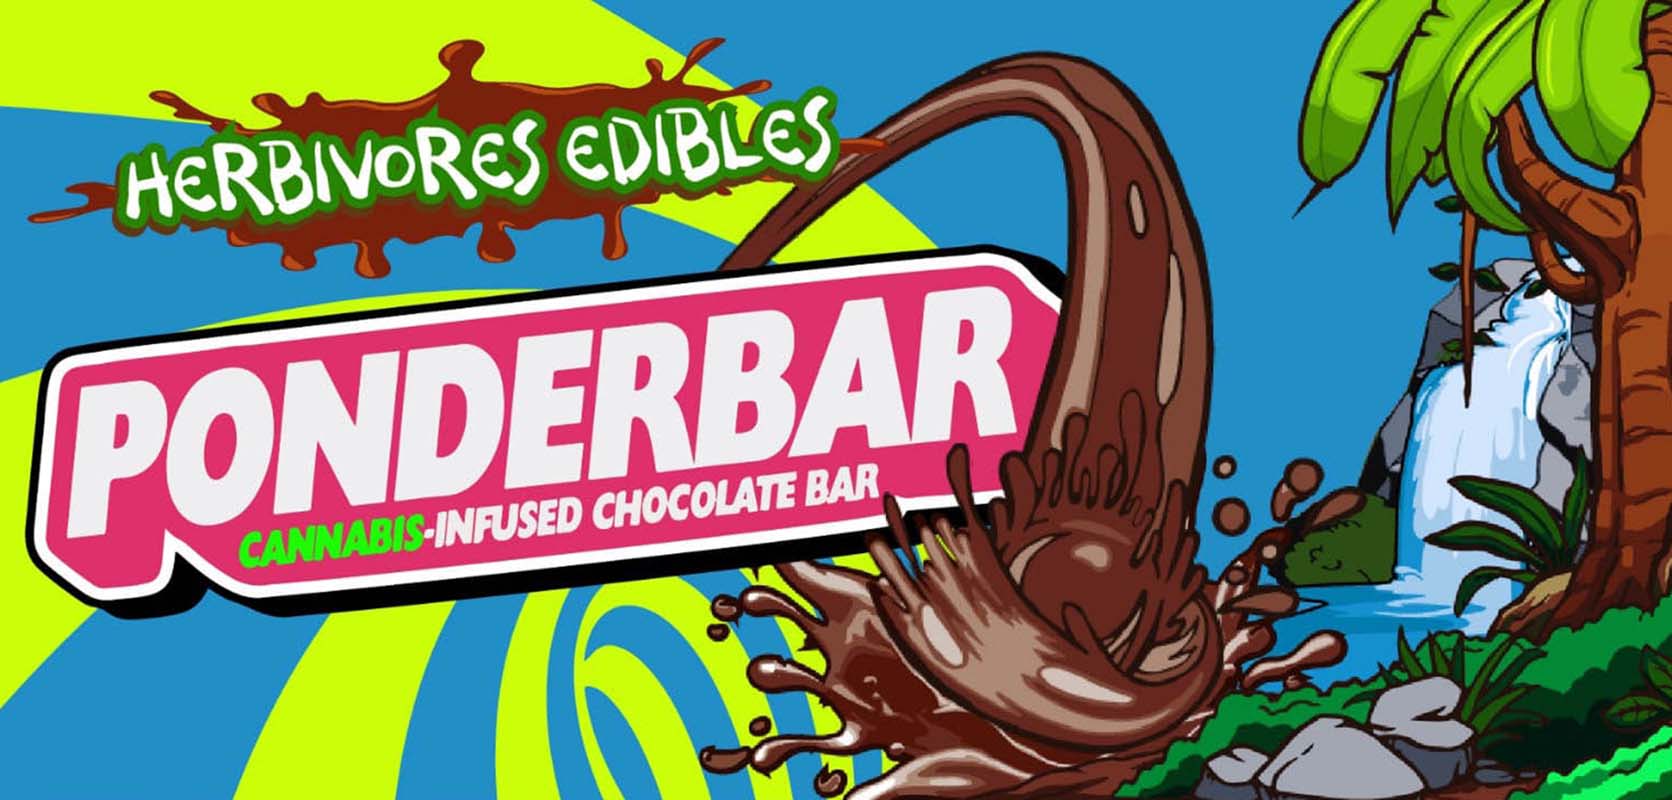 Herbivore Edibles Ponderbar Chocolate Weed Candy Bars. order weed online canada. cheap budz. cheap cannabis.